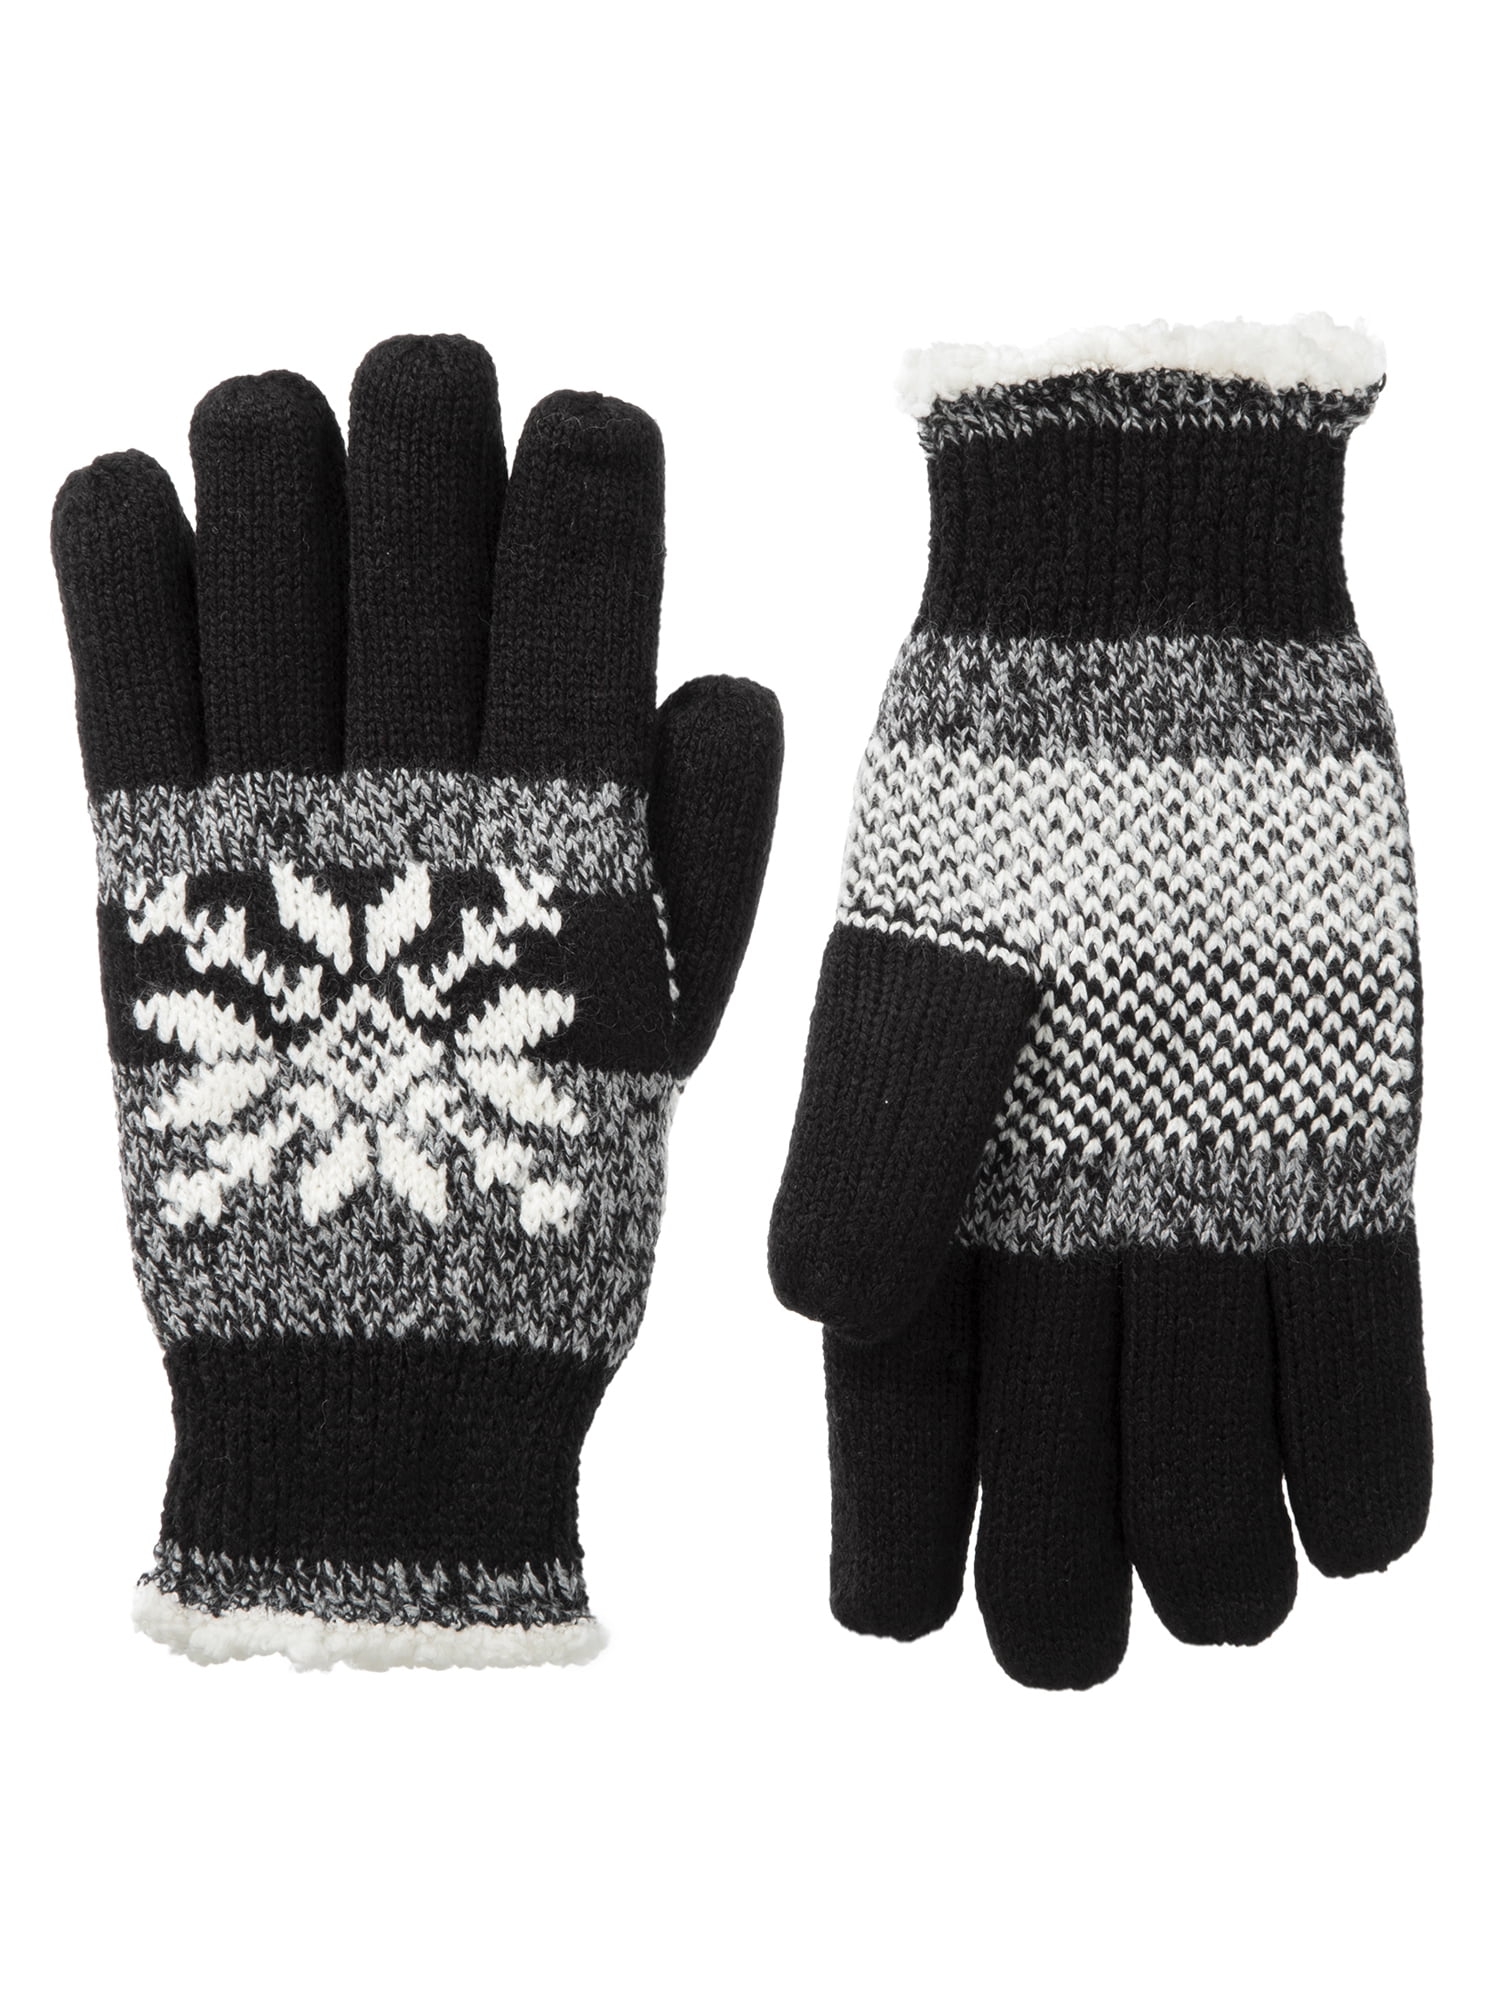 Men Magic Glove Winter Soft Knit One Size Warm Fashion Marled Pattern Workout 